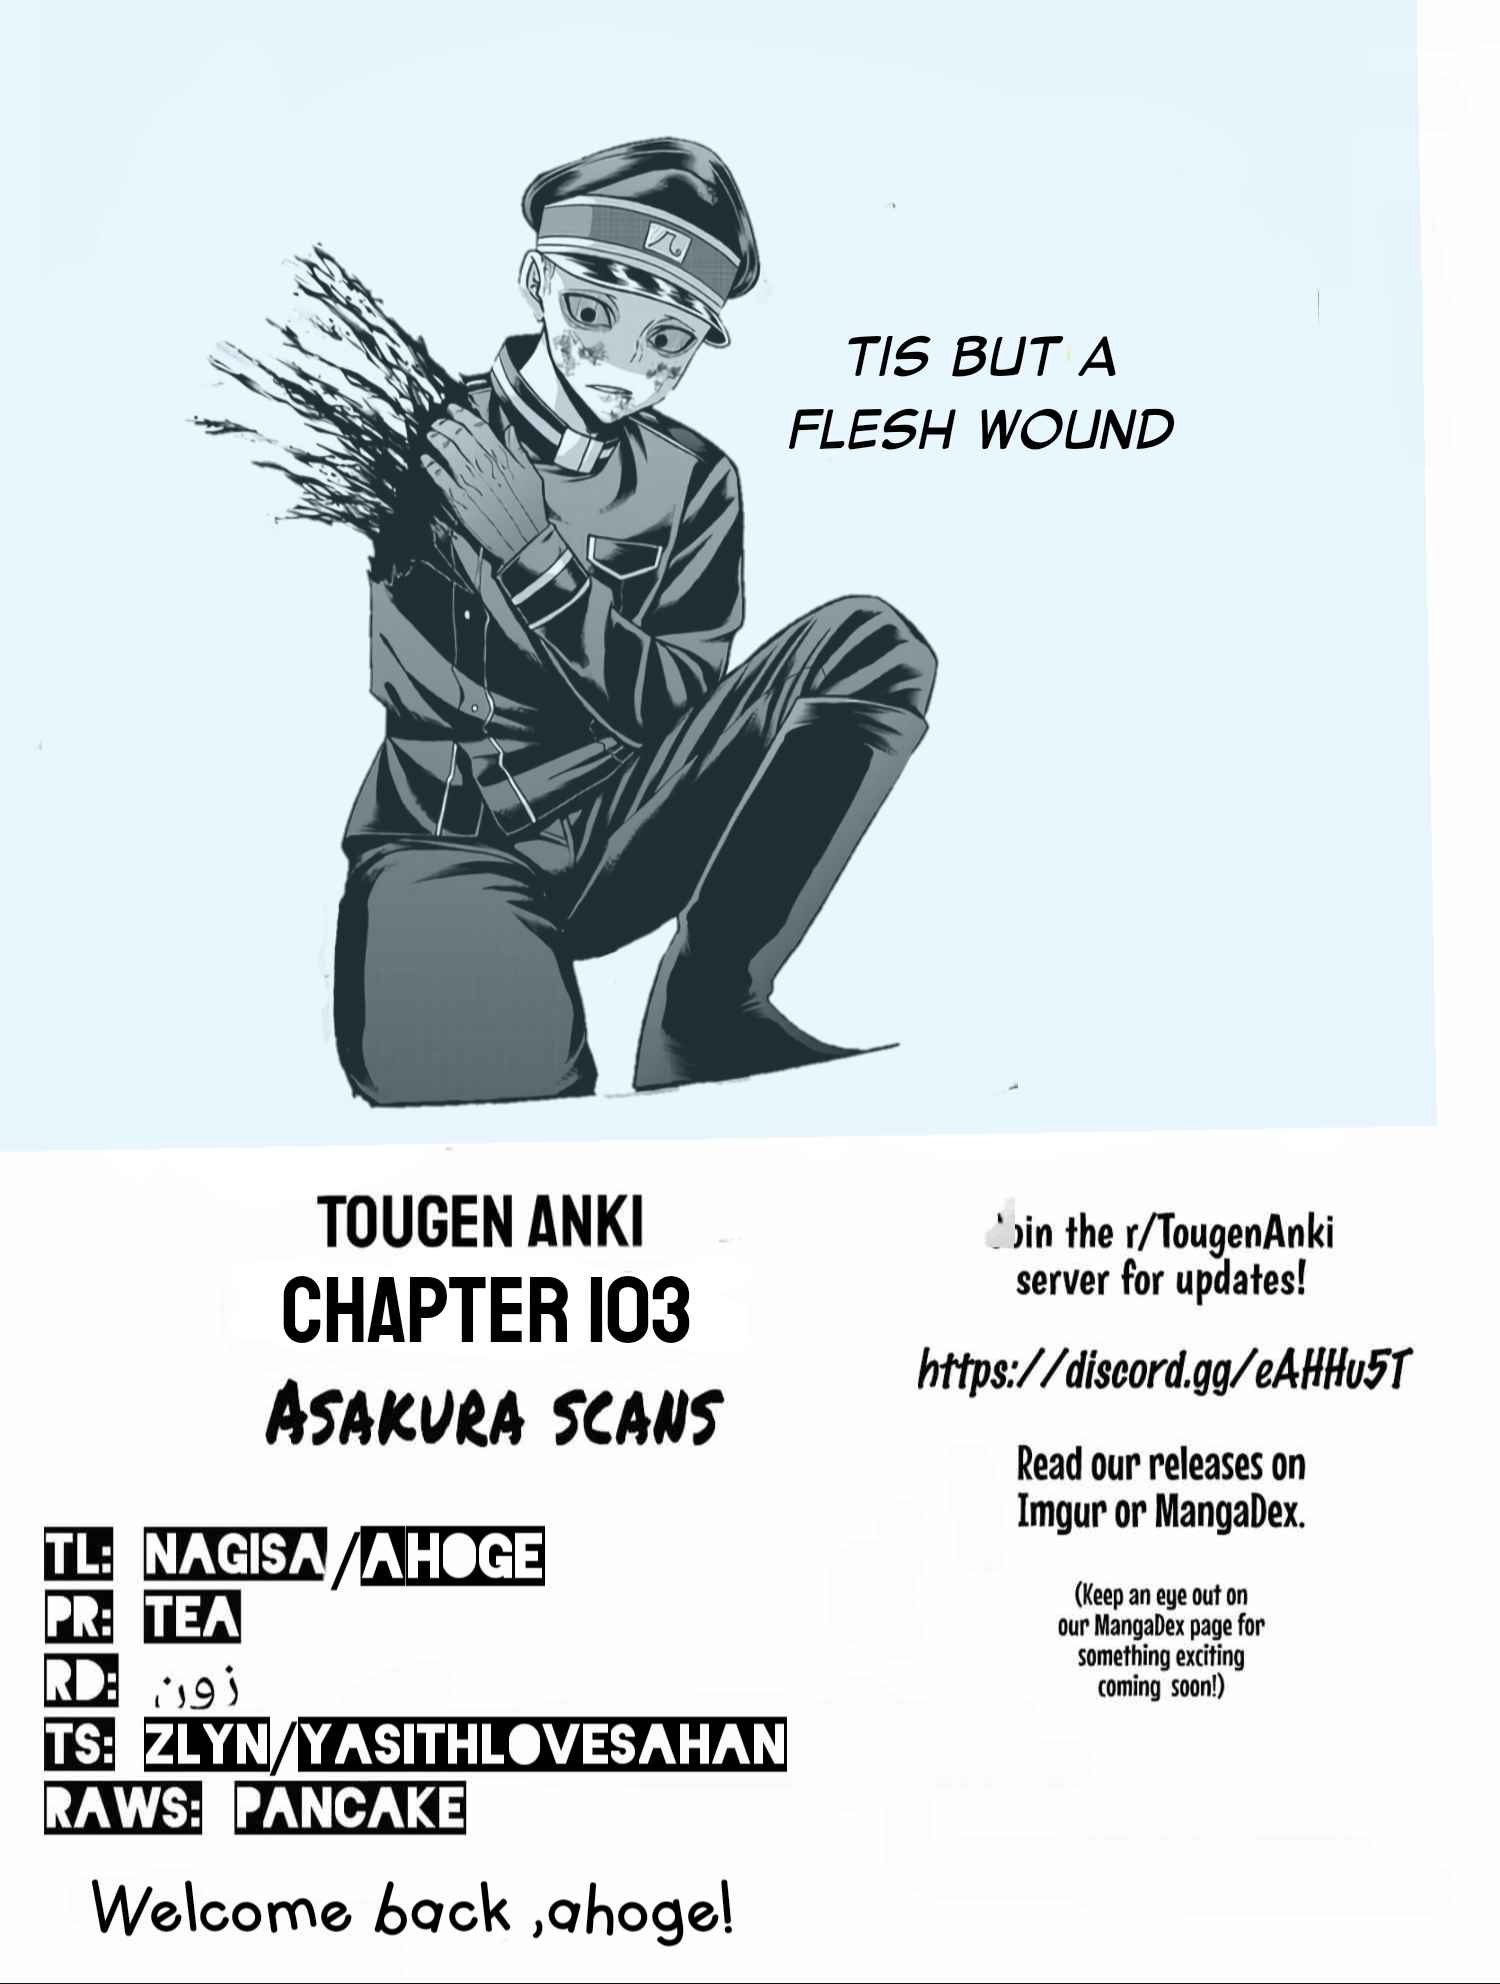 Tougen Anki, Tougen Anki manga, read Tougen Anki, Tougen Anki manga online, tougen anki anime, tougen anki mal, tougen anki review, tougen anki how many chapters, tougen anki anime adaptation, tougen anki manganelo, tougen anki wiki, shiki ichinose tougen anki